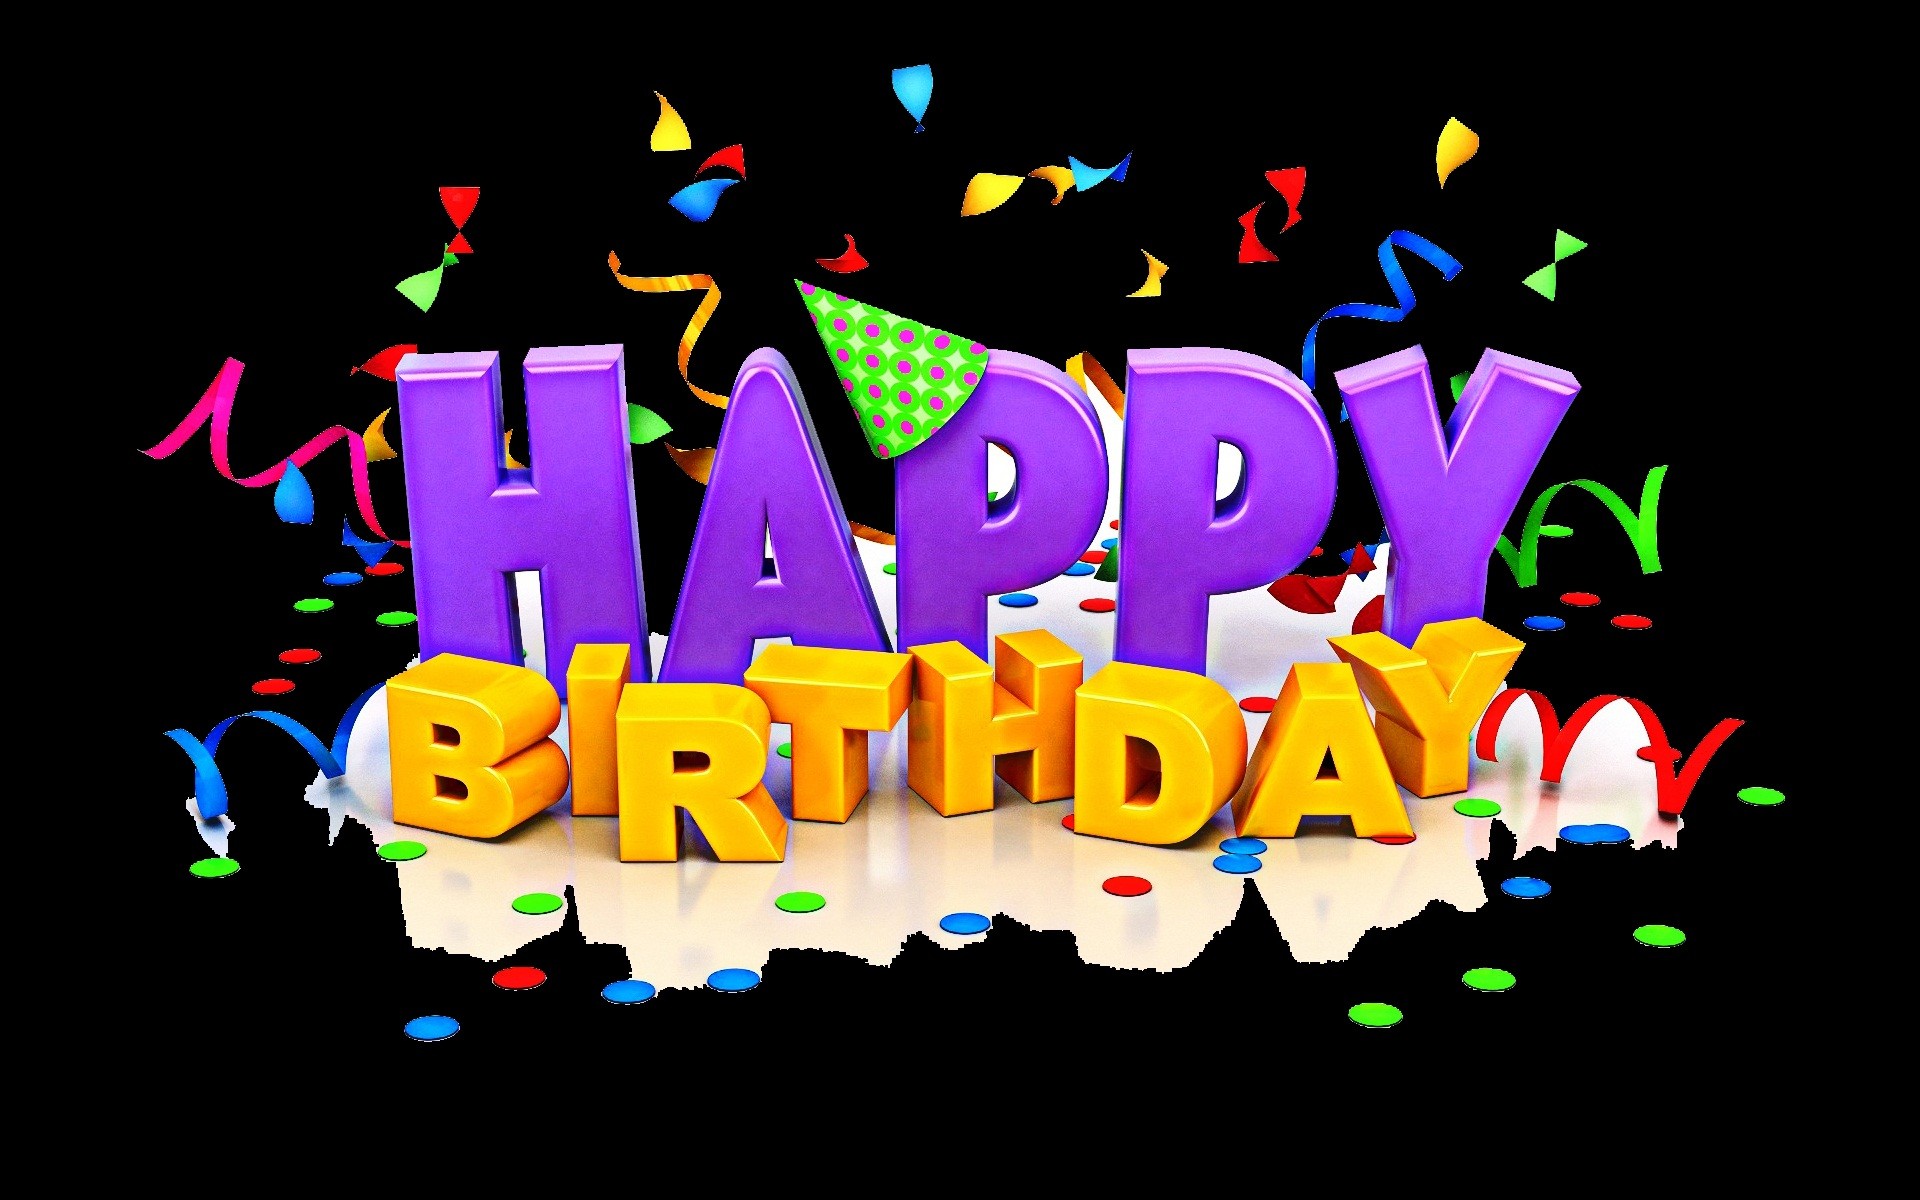 1920x1200 happy birthday by Moni Adler on 500px | Happy Birthday | Pinterest | Happy  birthday, Birthdays and Birthday cakes